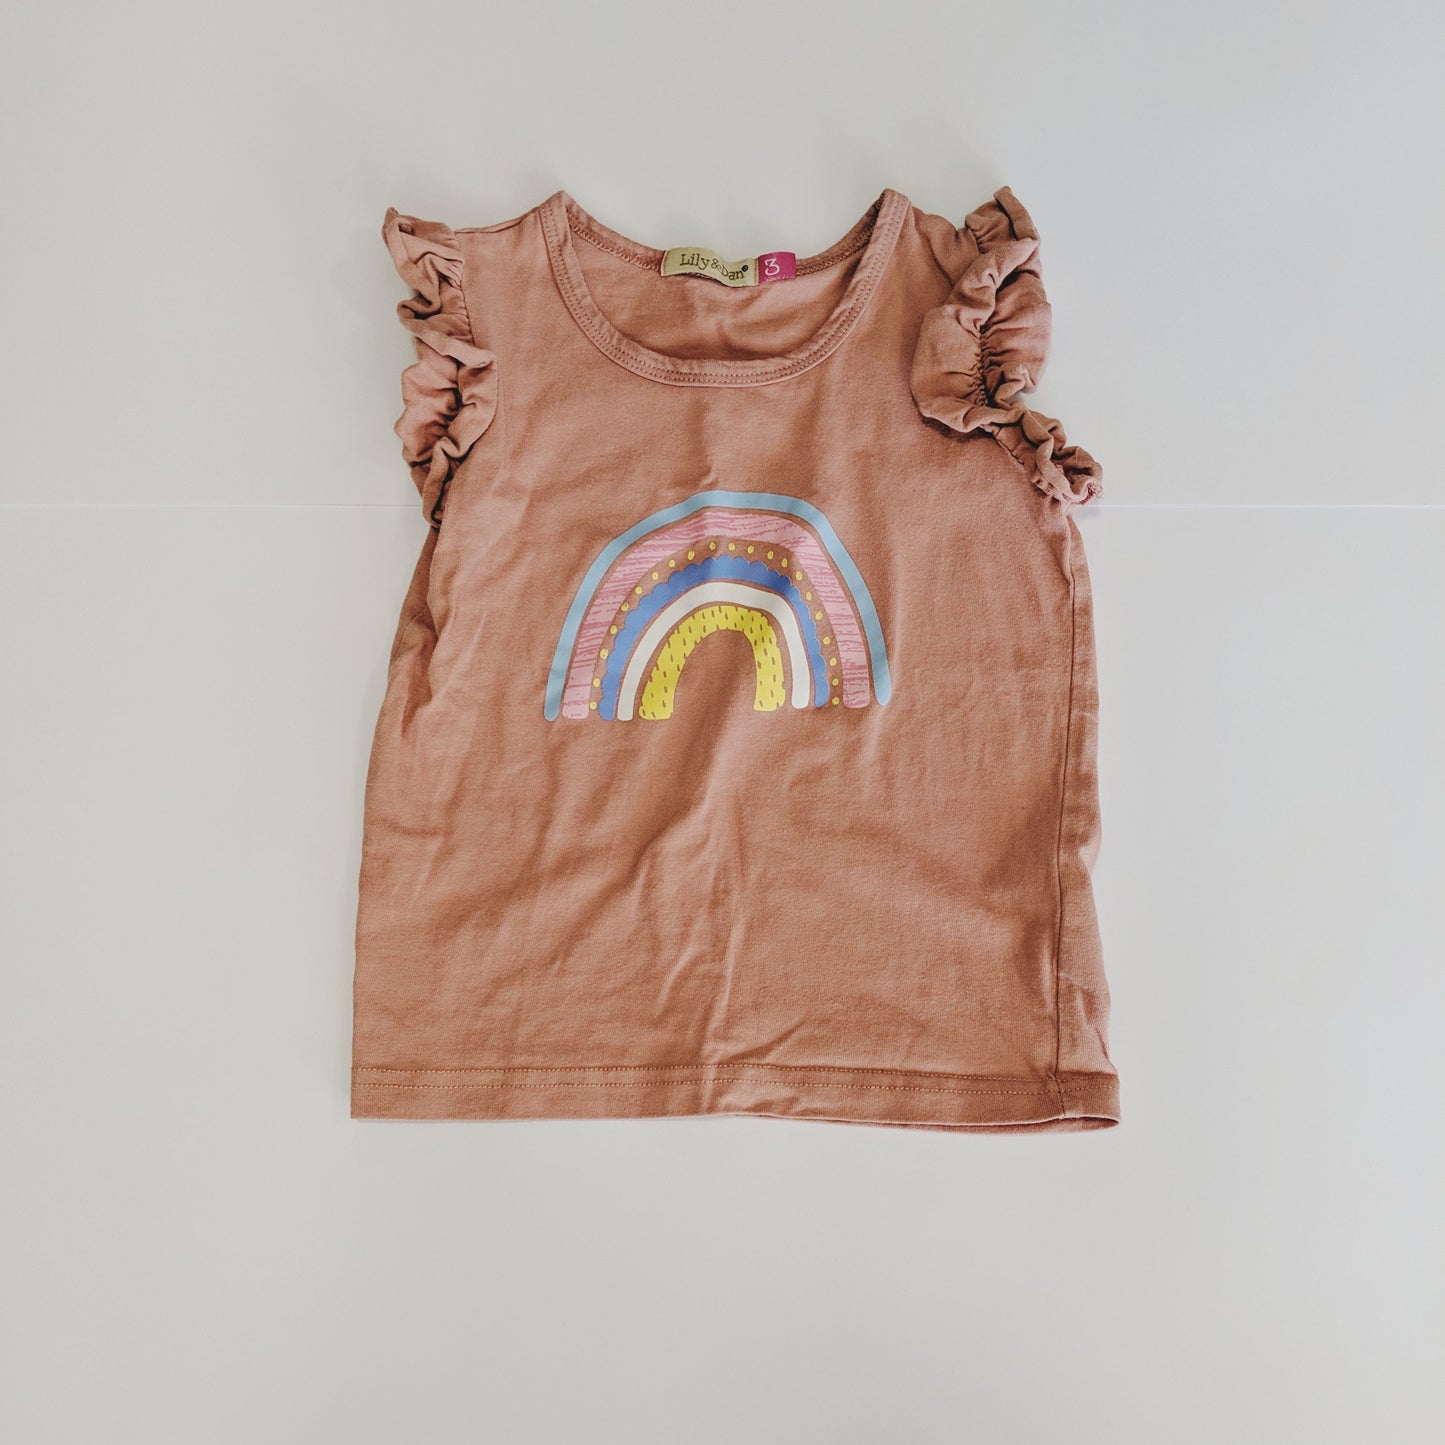 Rainbow frill shirt - size 3